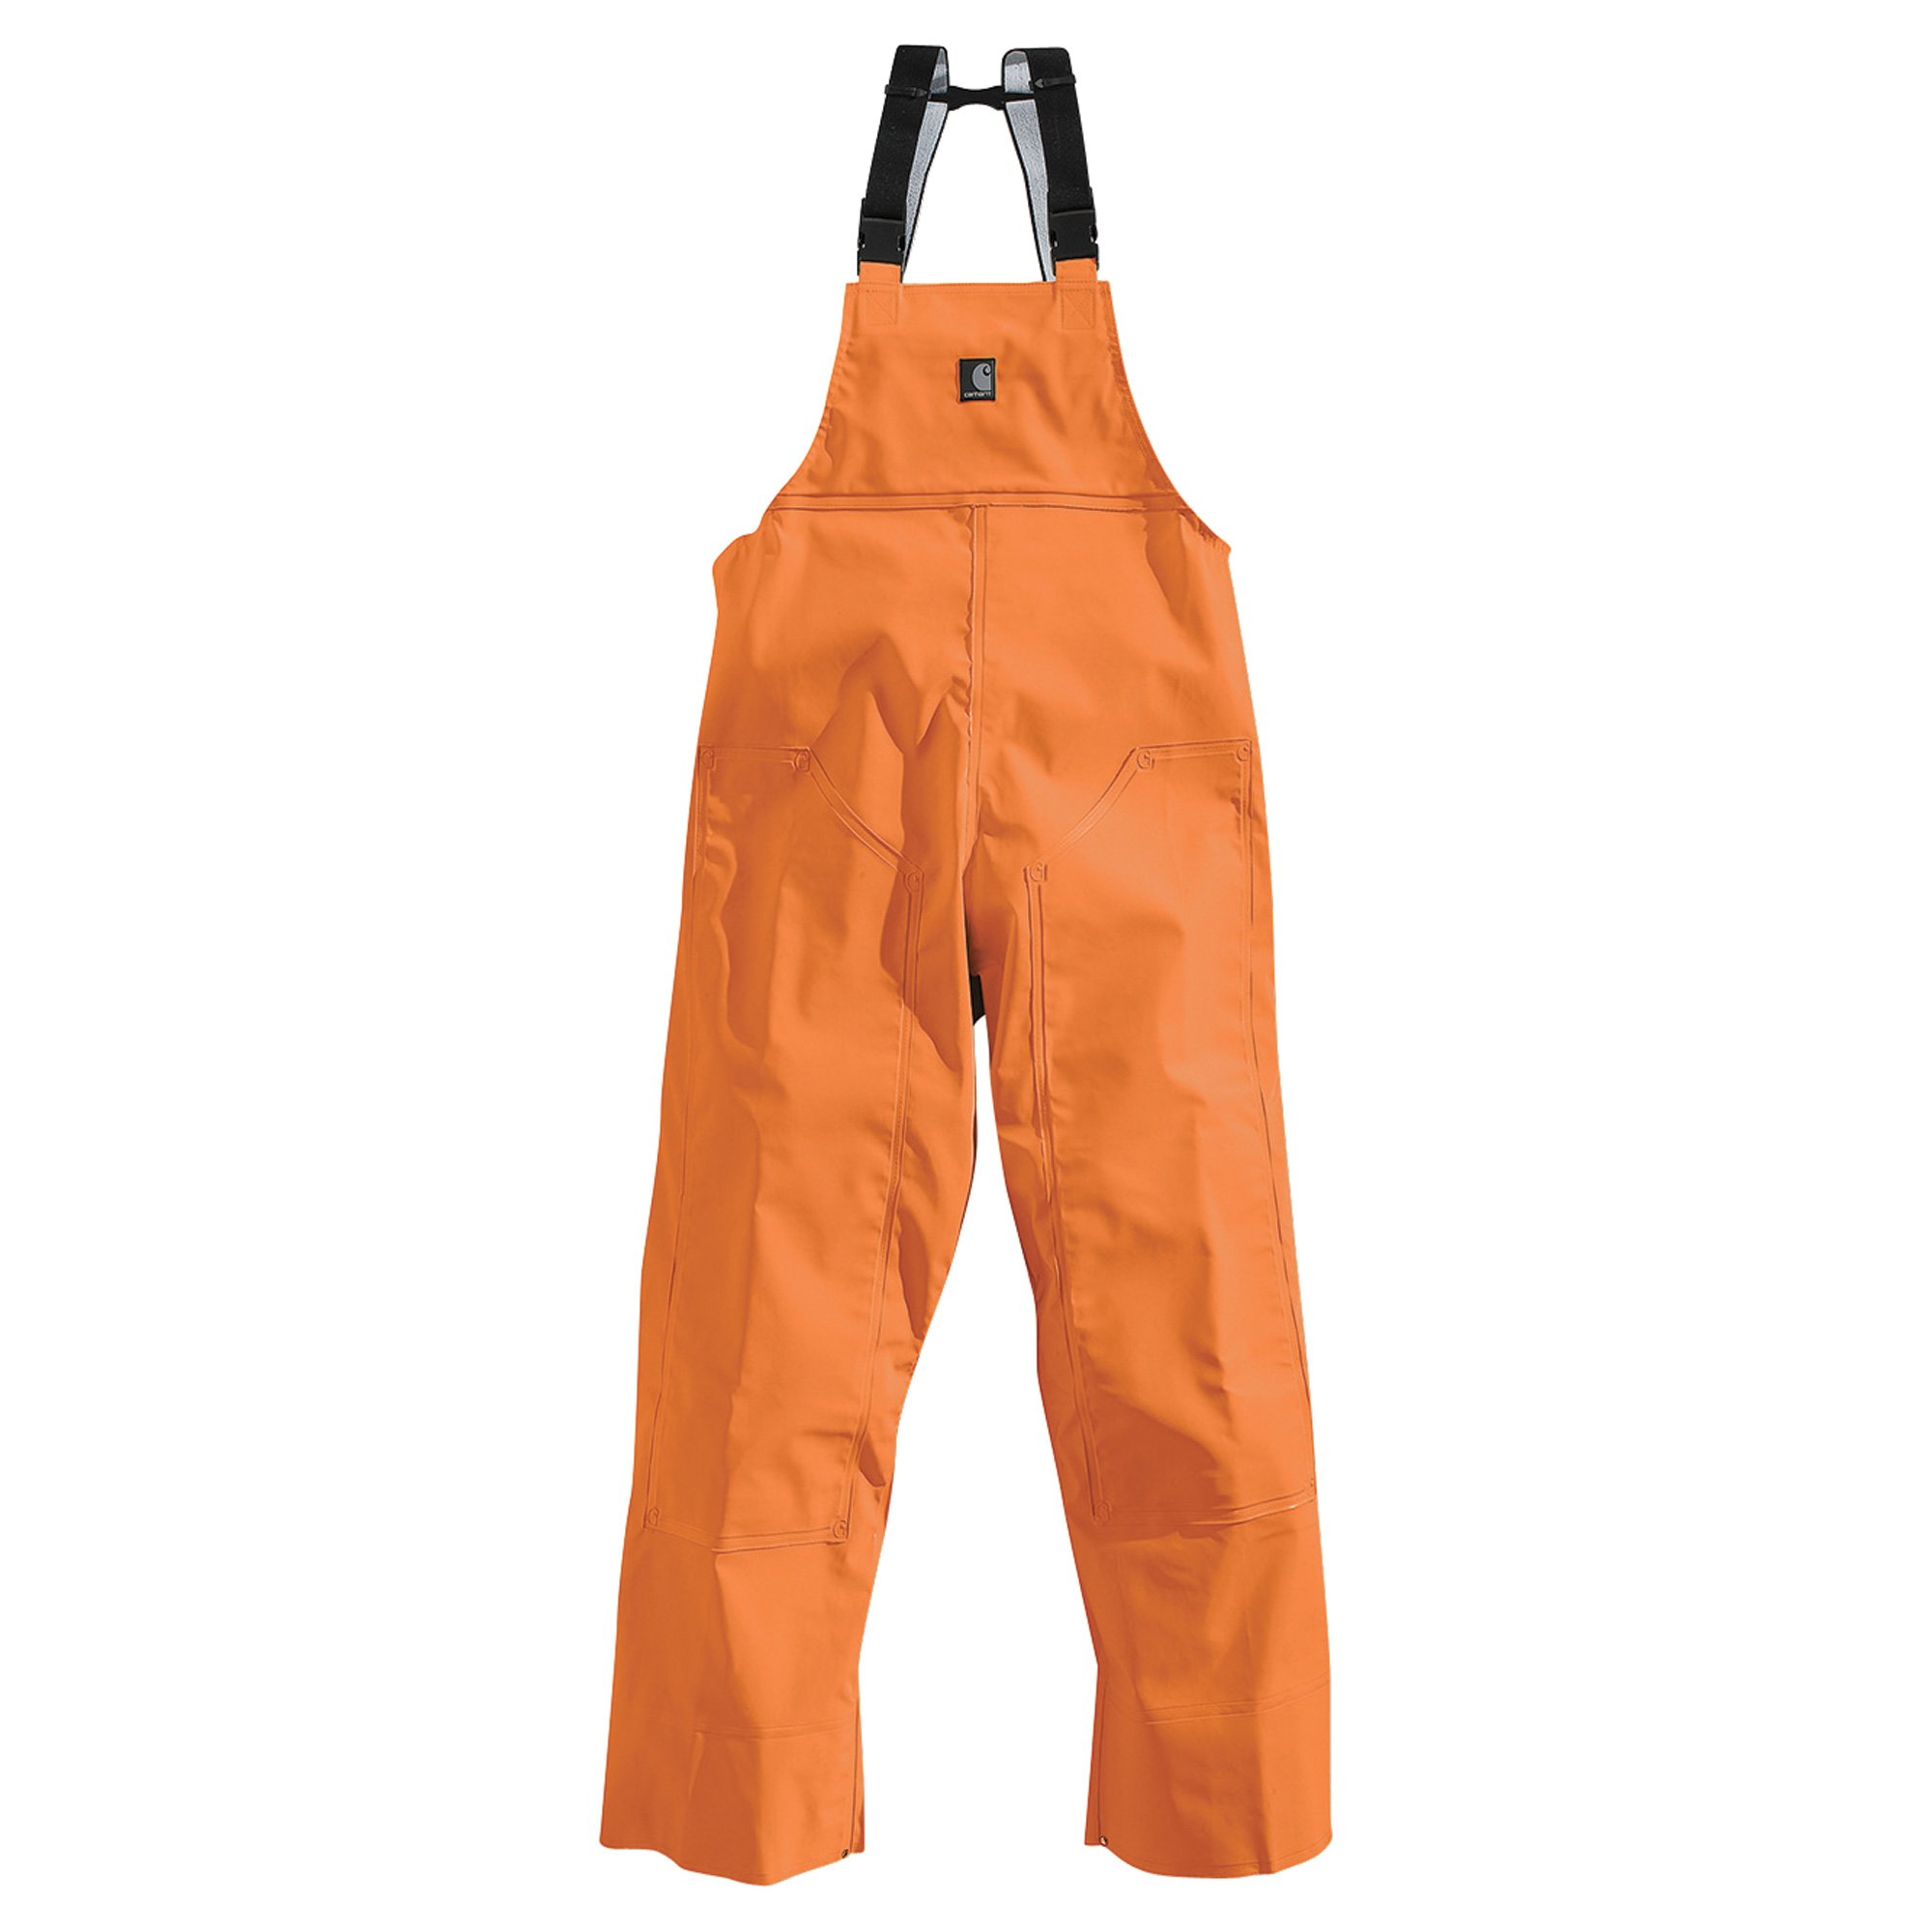 Carhartt C64ORG Orange PVC Rain Coat With Detachable Hood